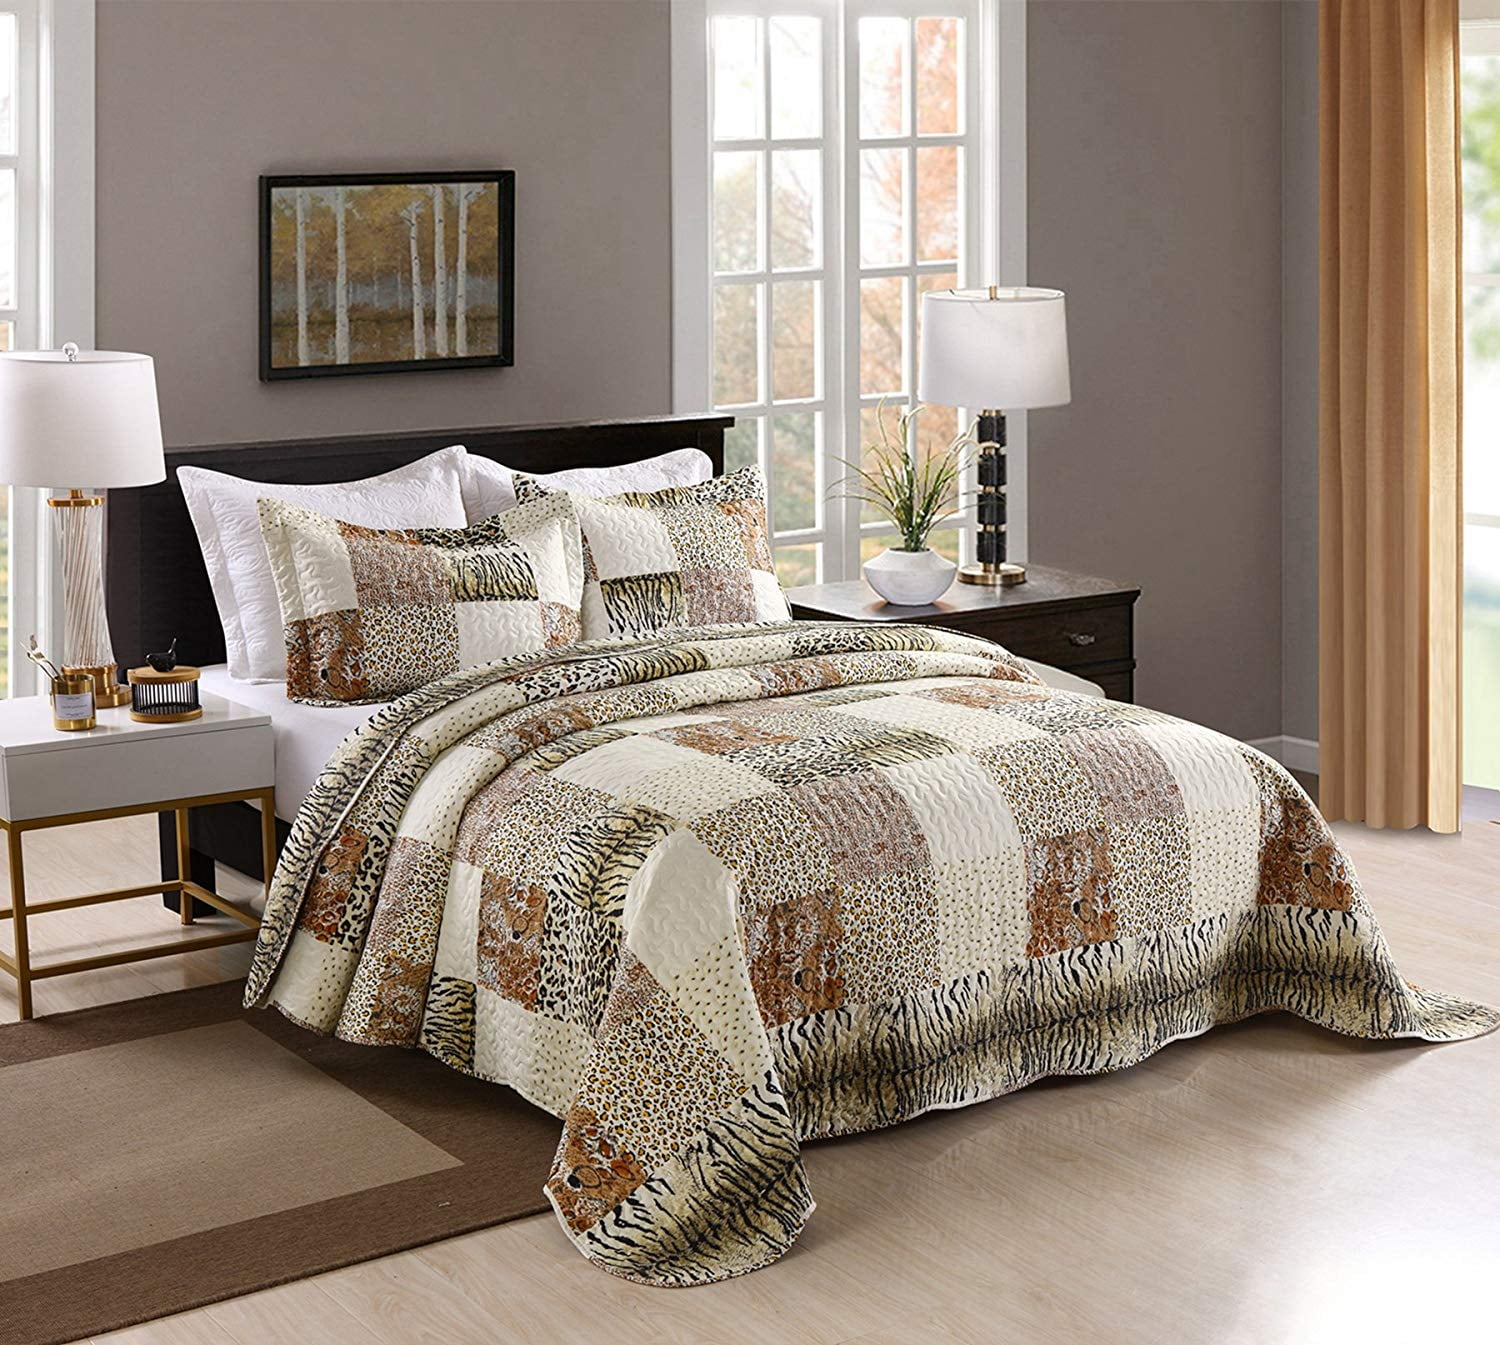 Animal Print Bedding Cheetah Comforter Set Queen Size Oversized Reversible NEW 